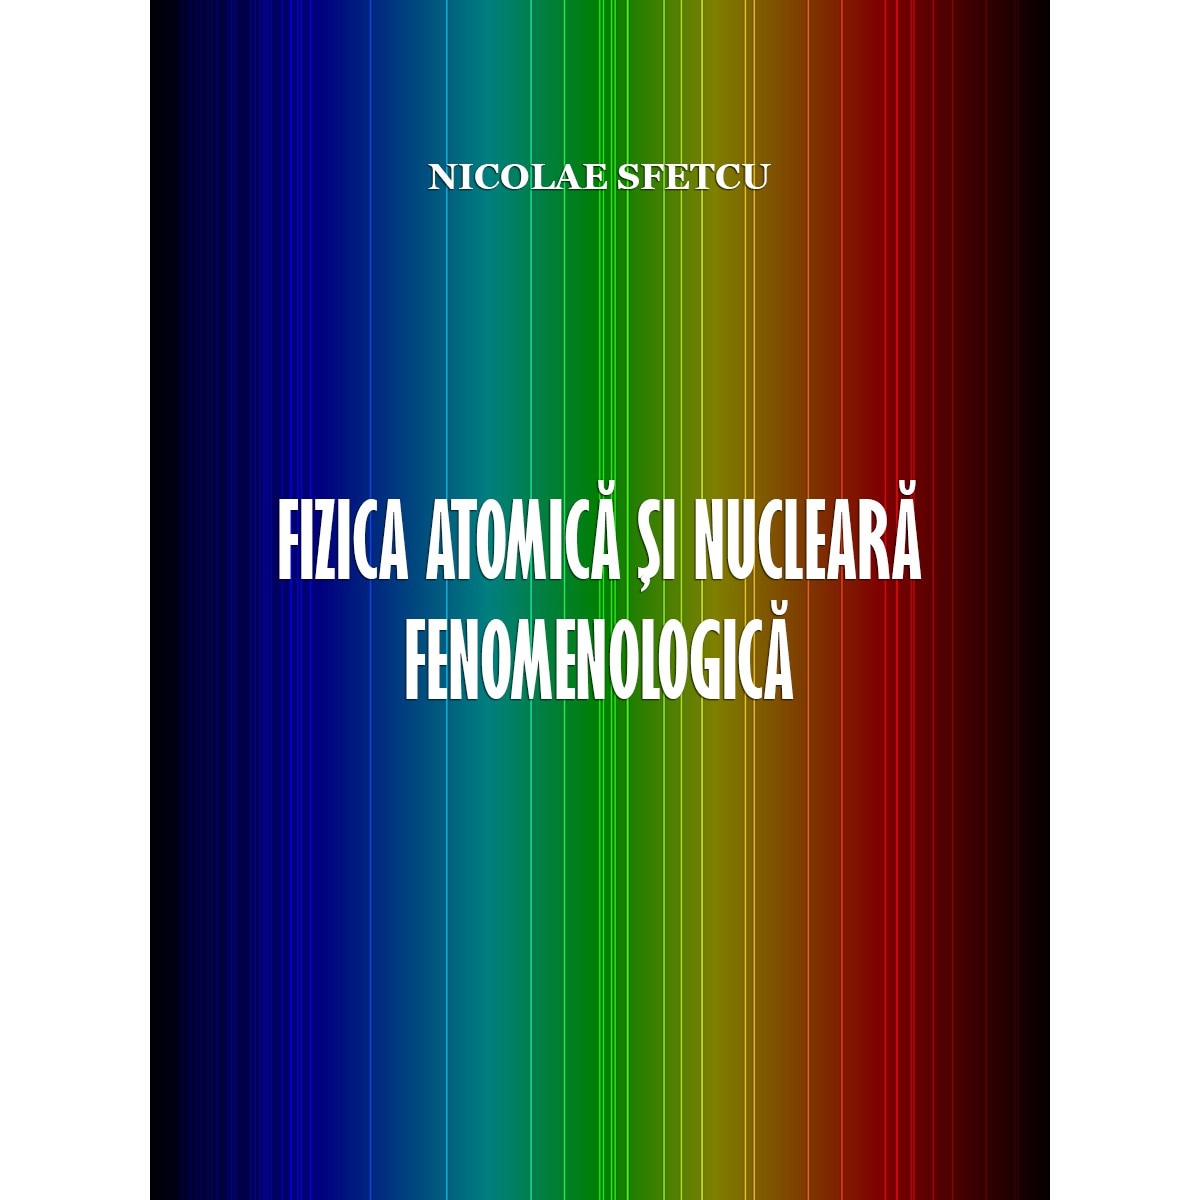 Honest Miscellaneous Year Fizica atomica si nucleara fenomenologica, MultiMedia Publishing, PDF -  eMAG.ro